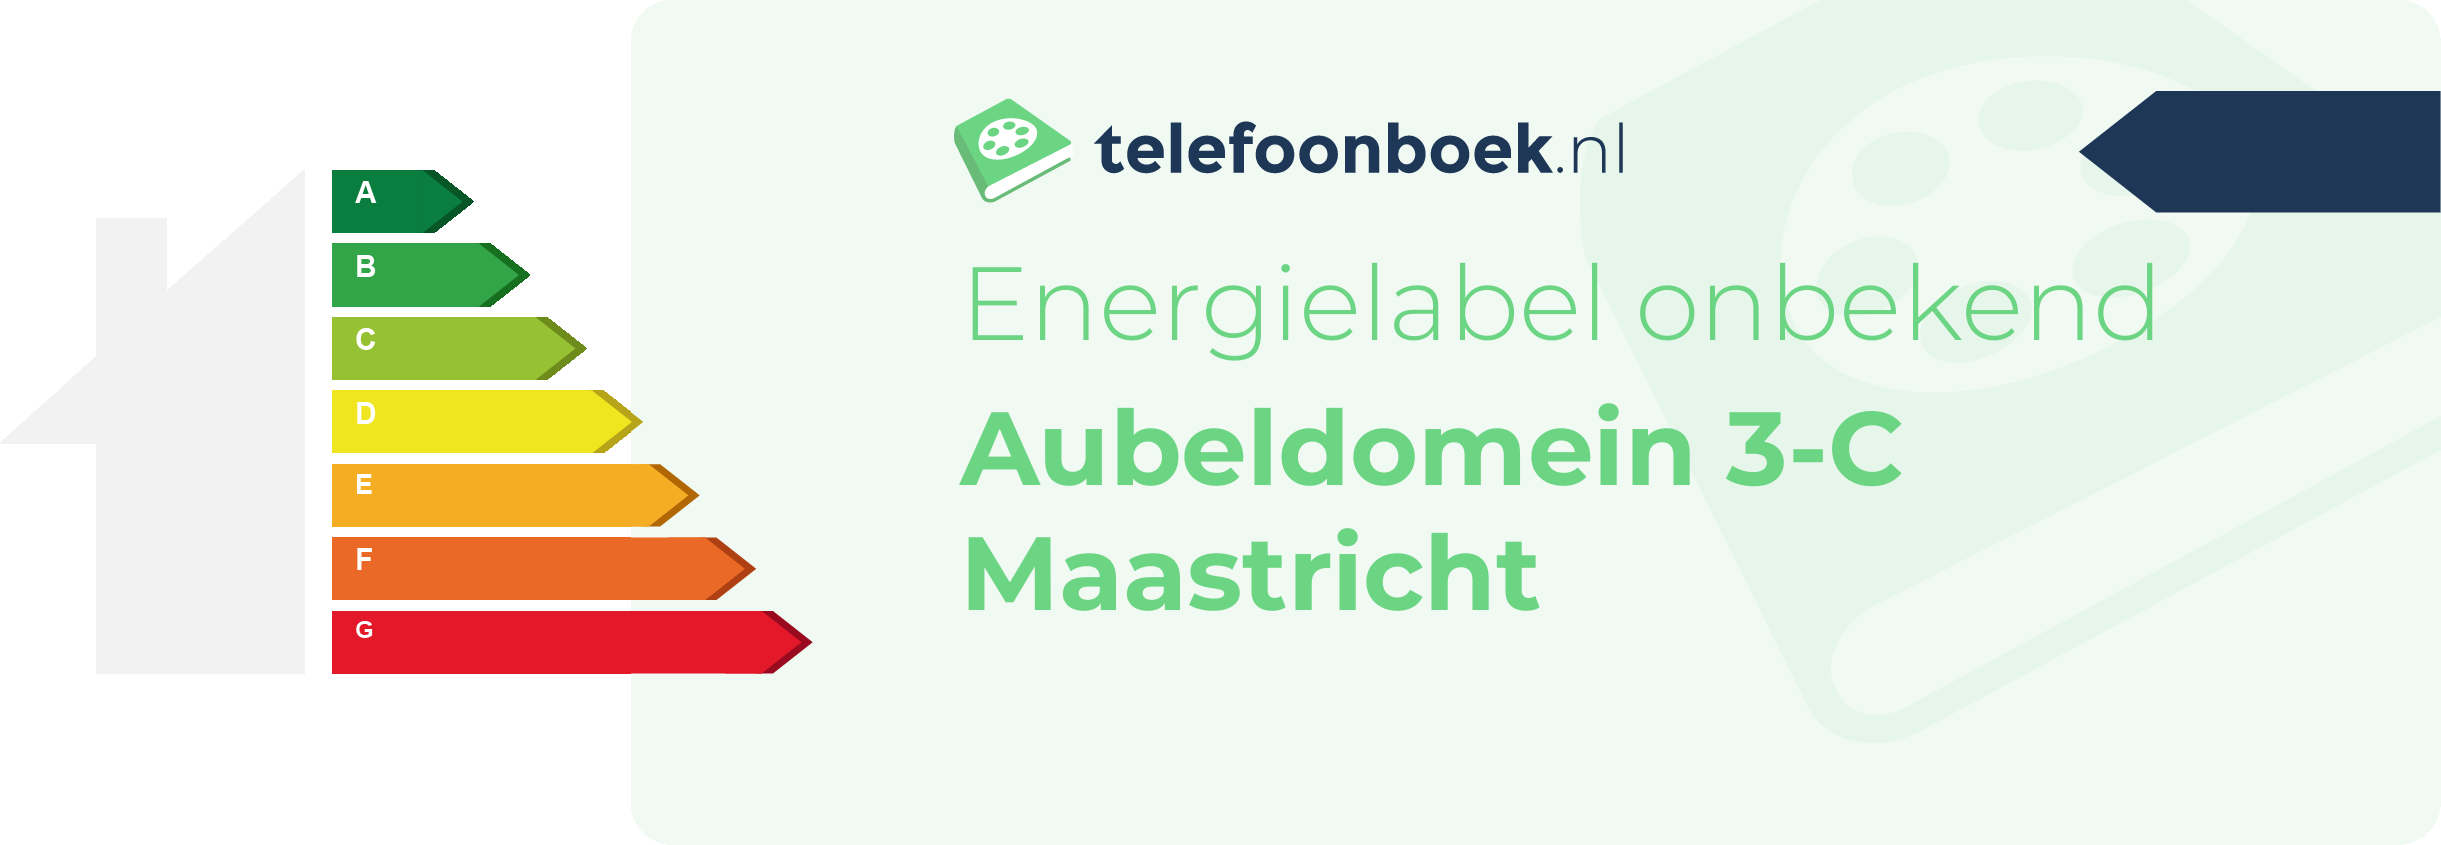 Energielabel Aubeldomein 3-C Maastricht